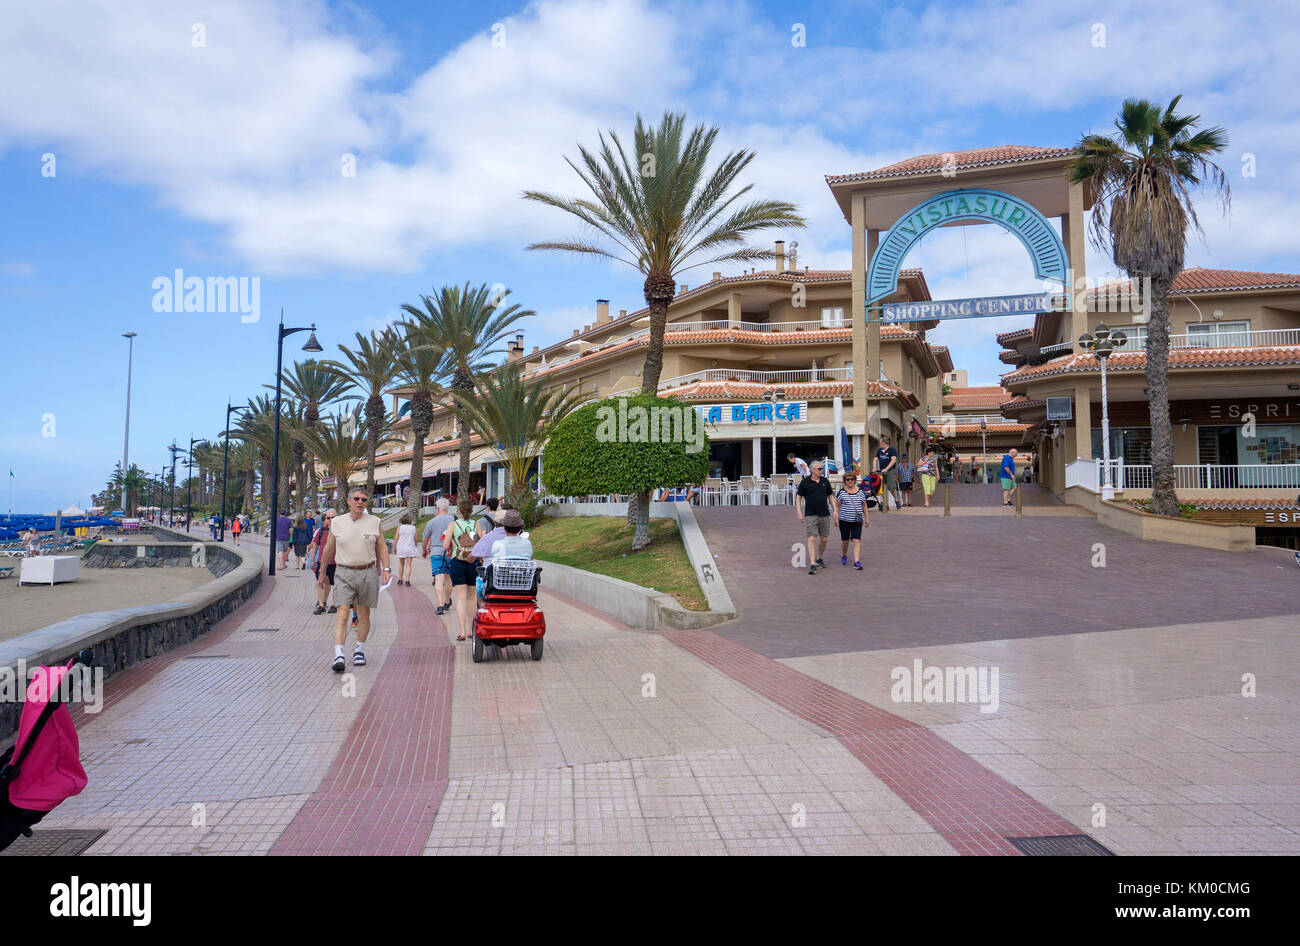 Shopping Center Vista Sud at the promenade of Los Christianos, South coast of Tenerife island, Canary islands, Spain Stock Photo